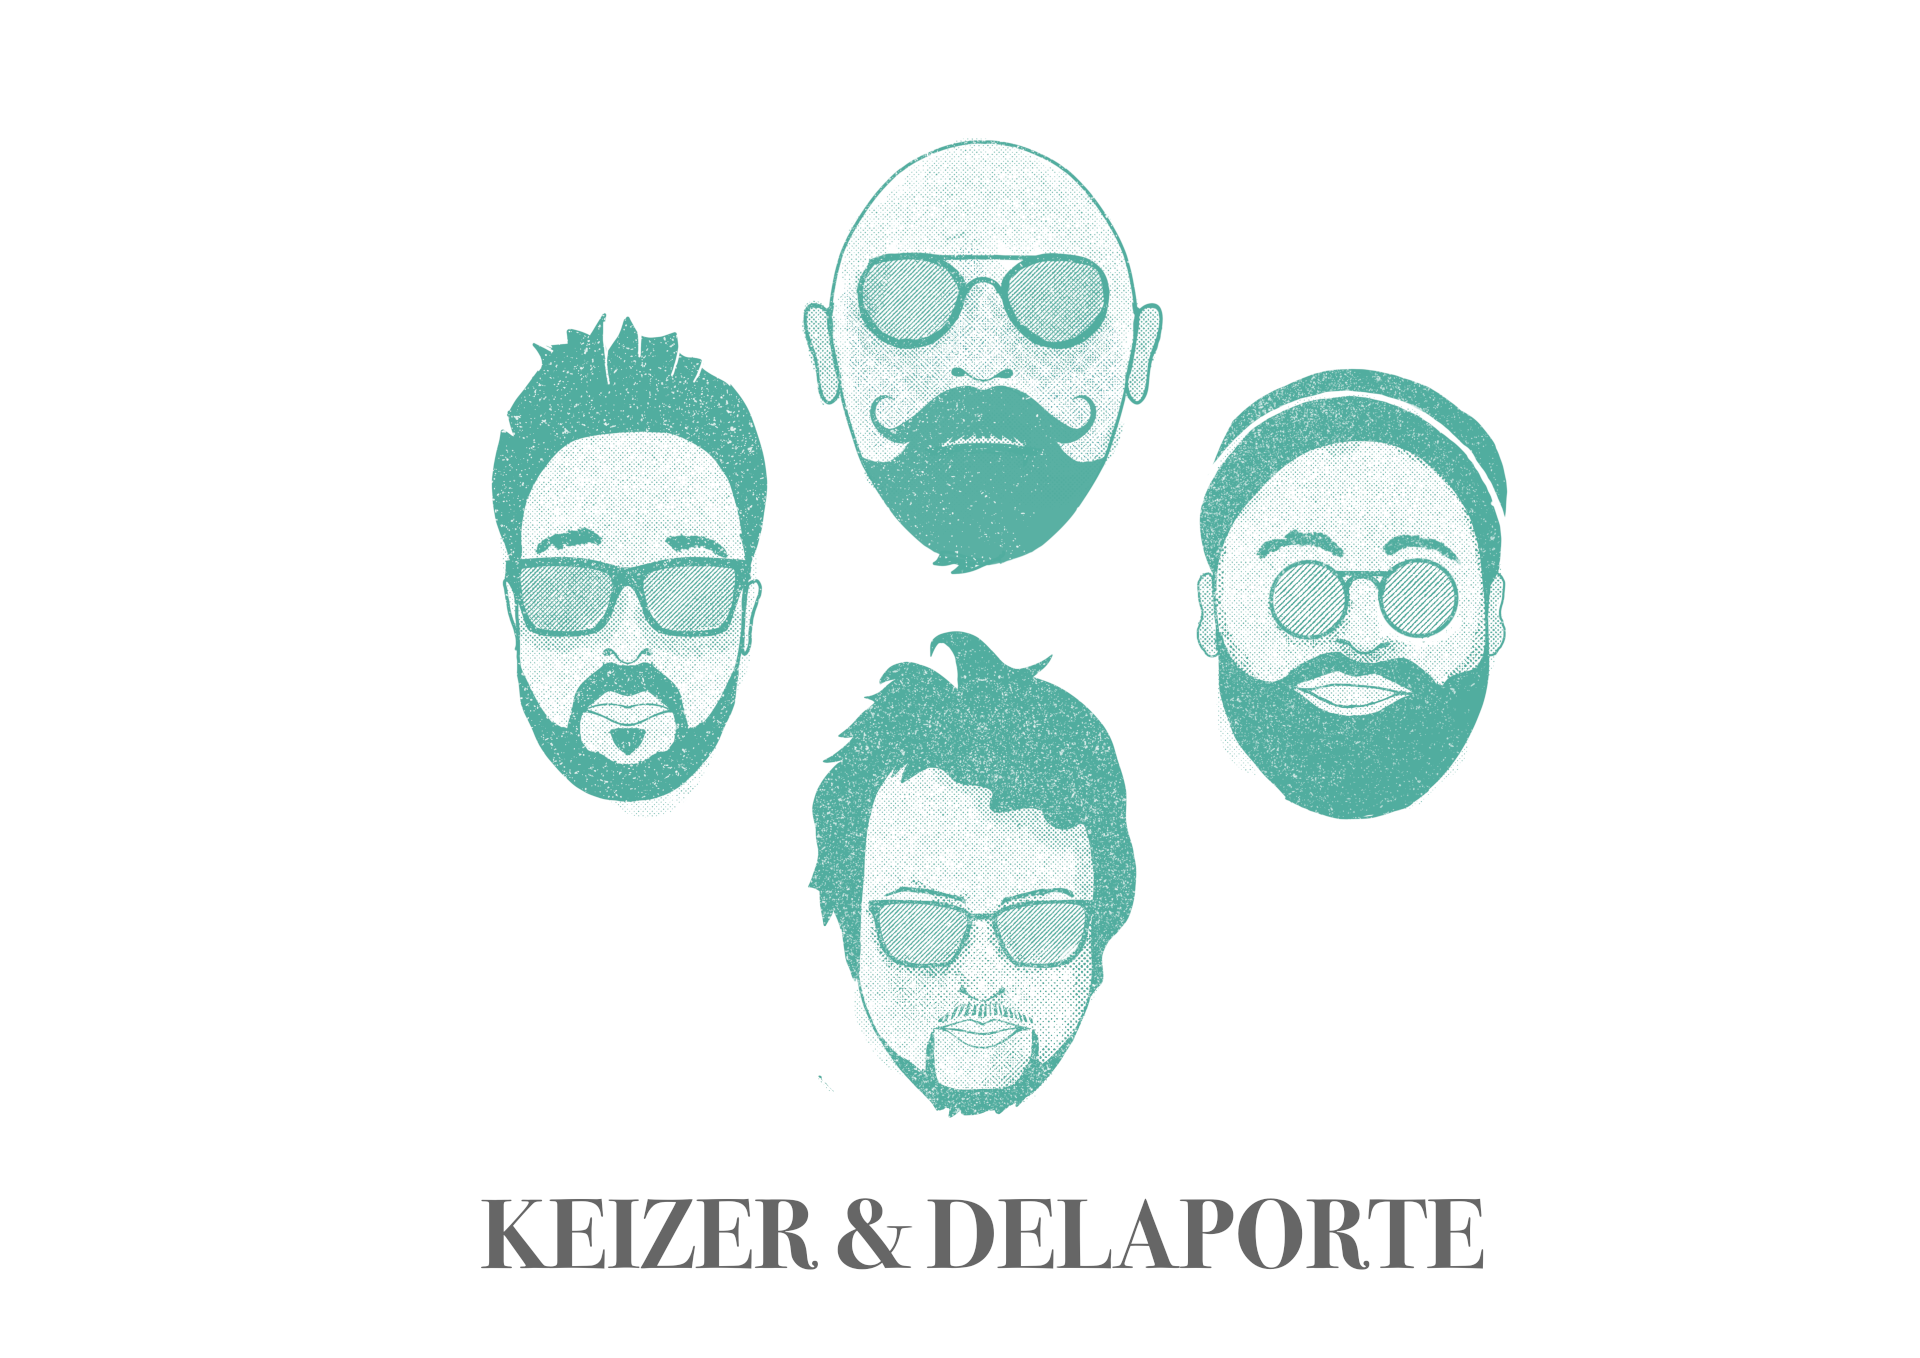 Keizer & DelaPorte